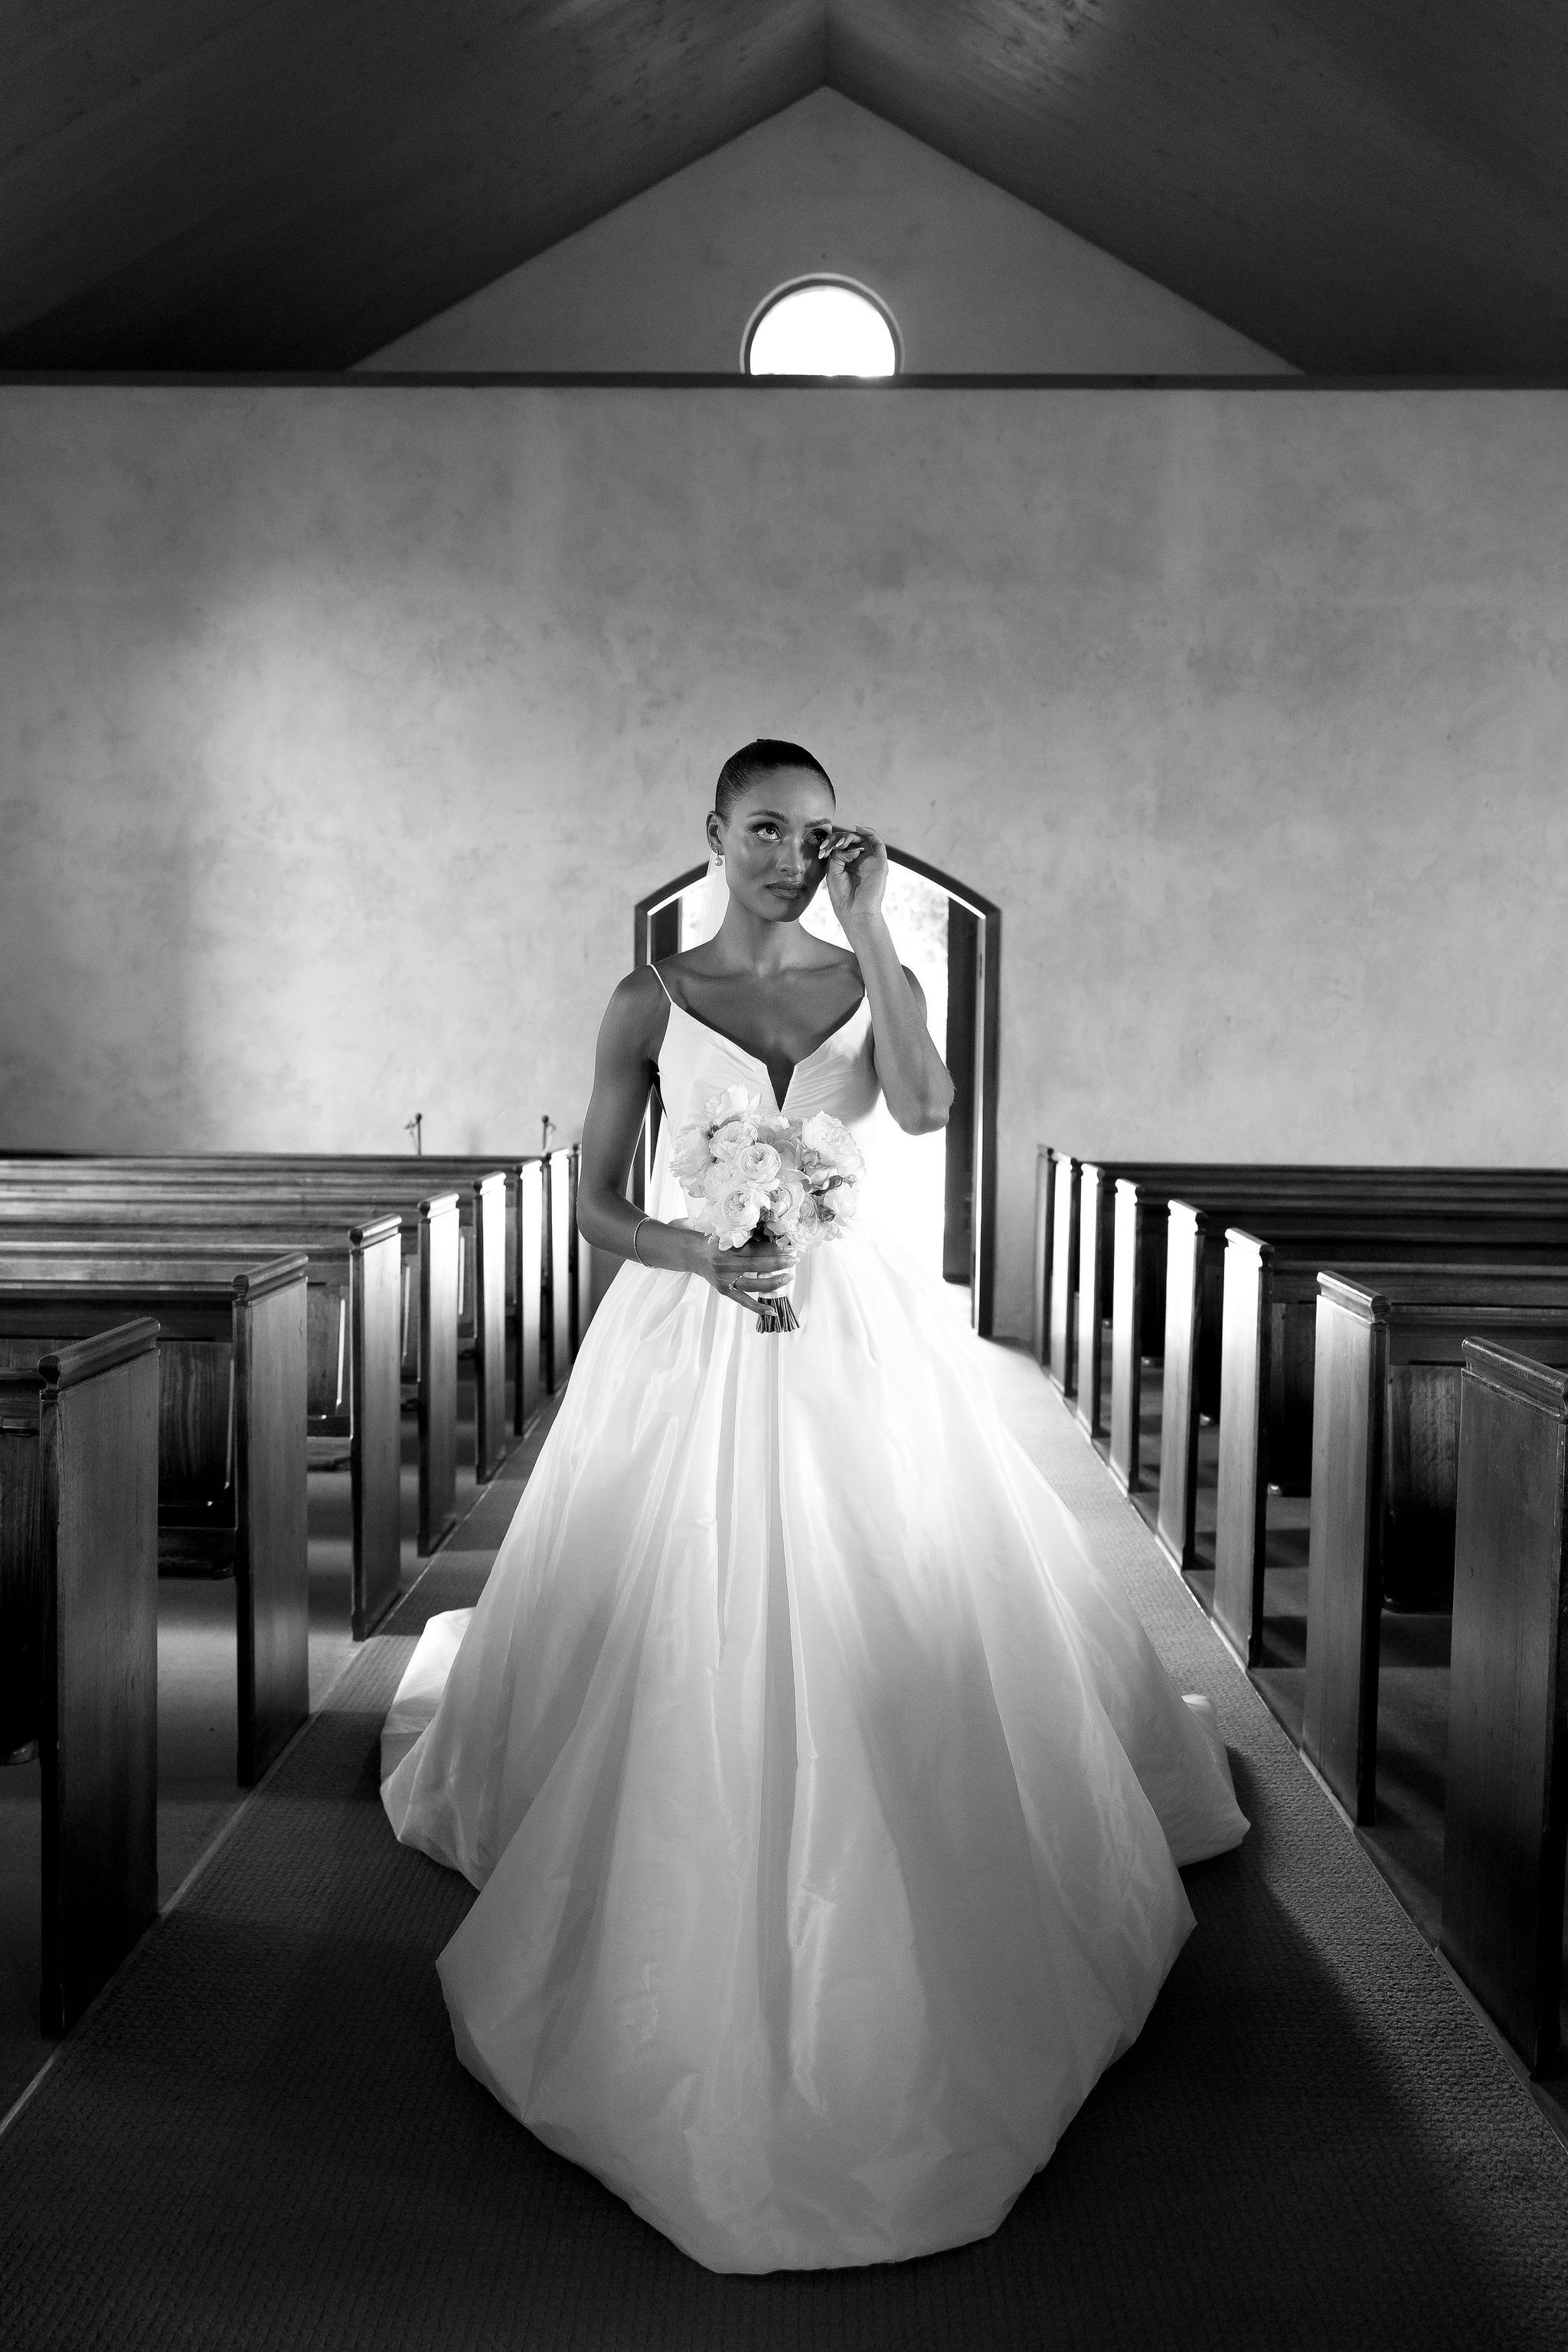 Chosen by KYHA bride Nonny Mulholland in BISSET gown